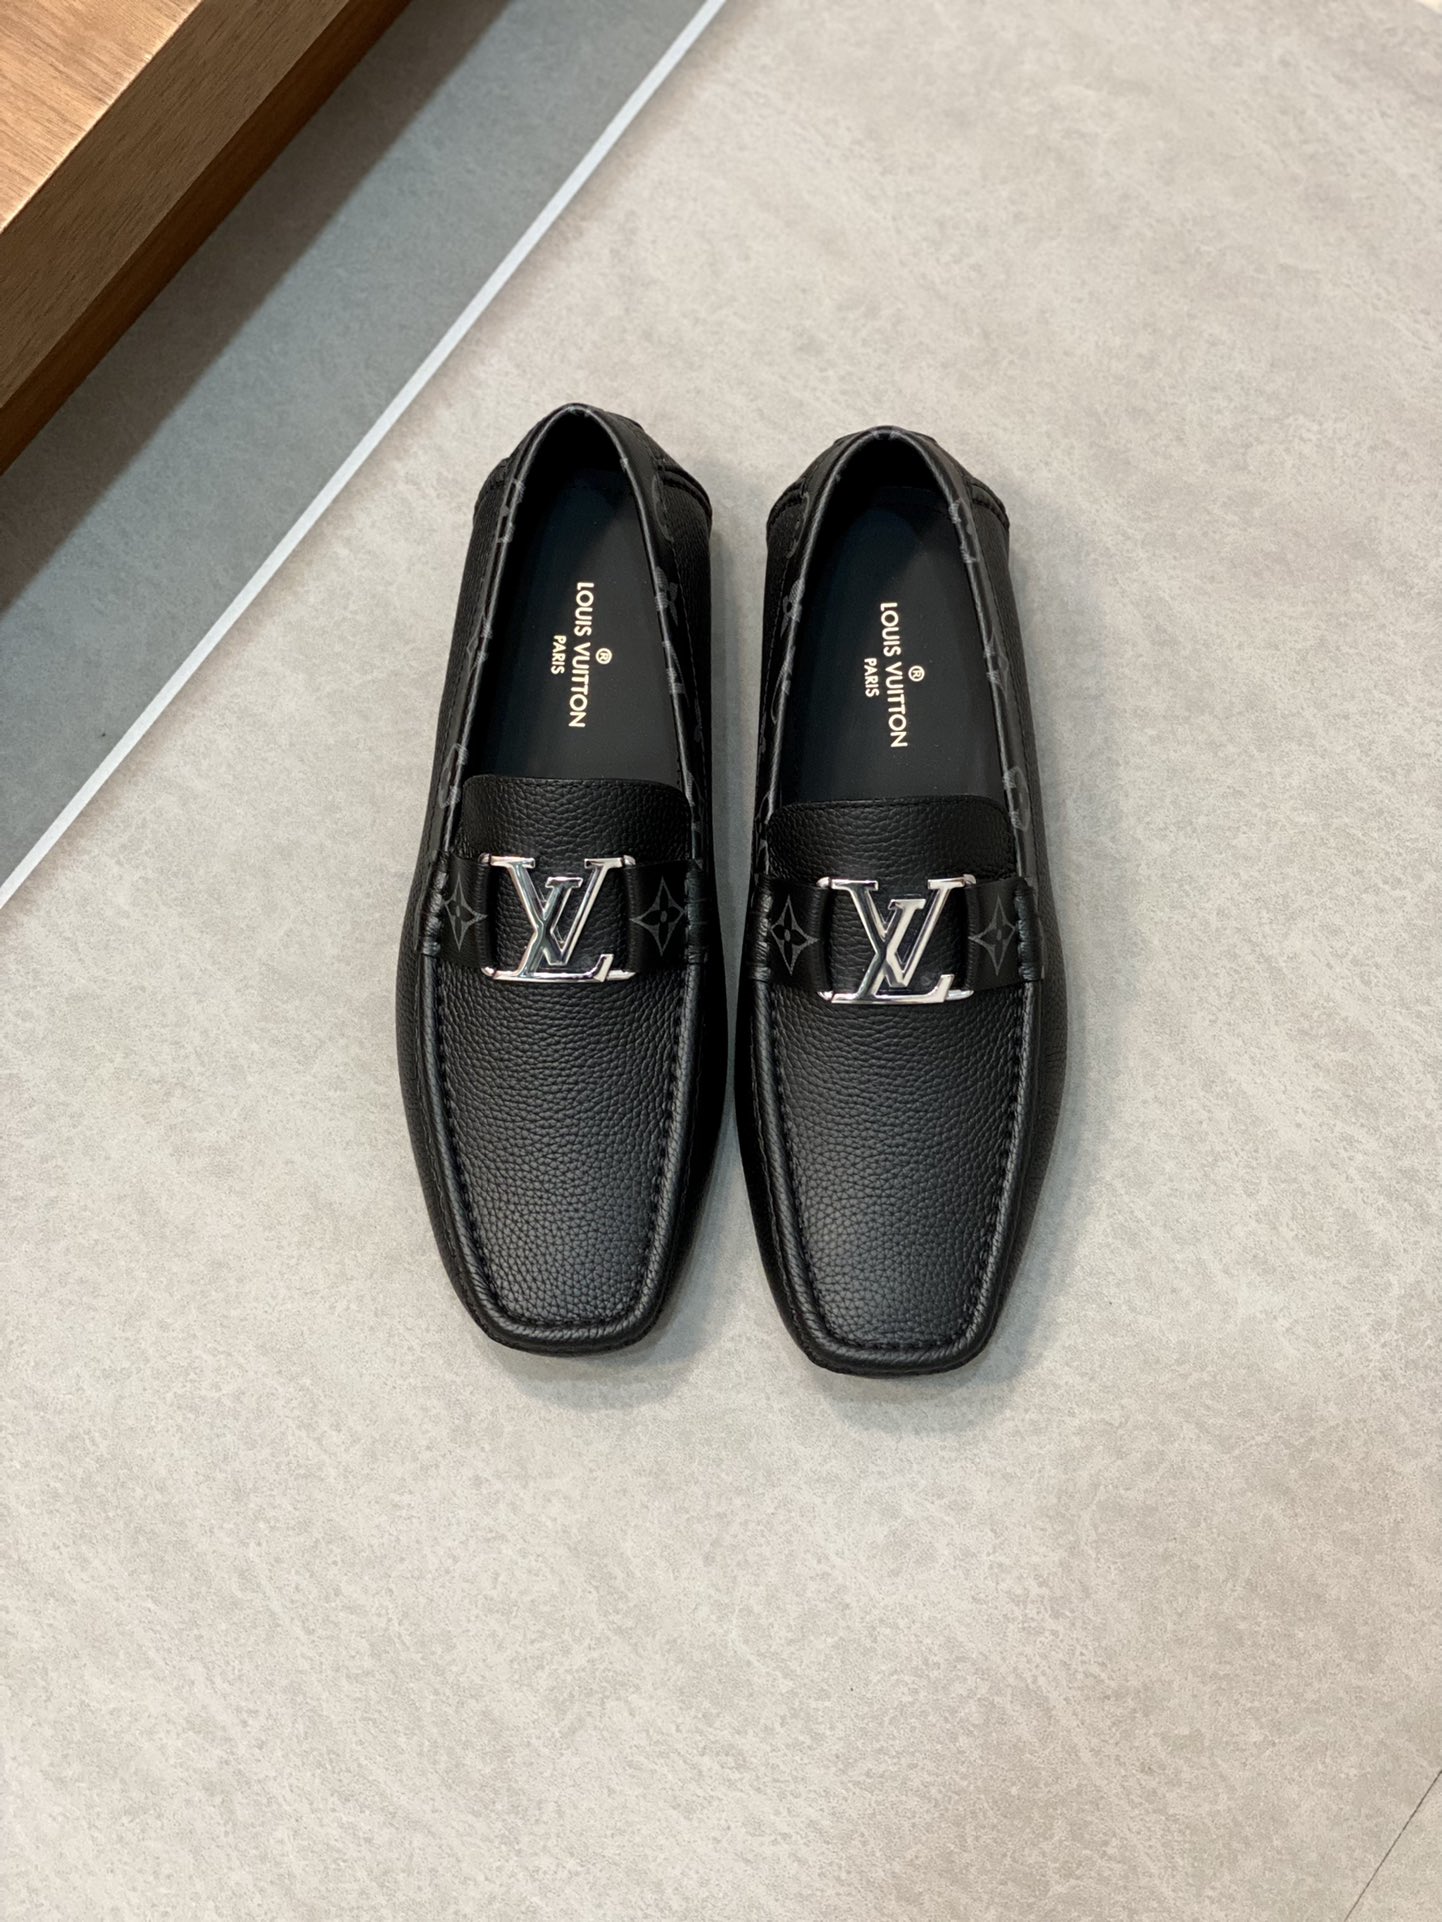 Louis Vuitton Shoes Moccasin Top 1:1 Replica
 Calfskin Cowhide